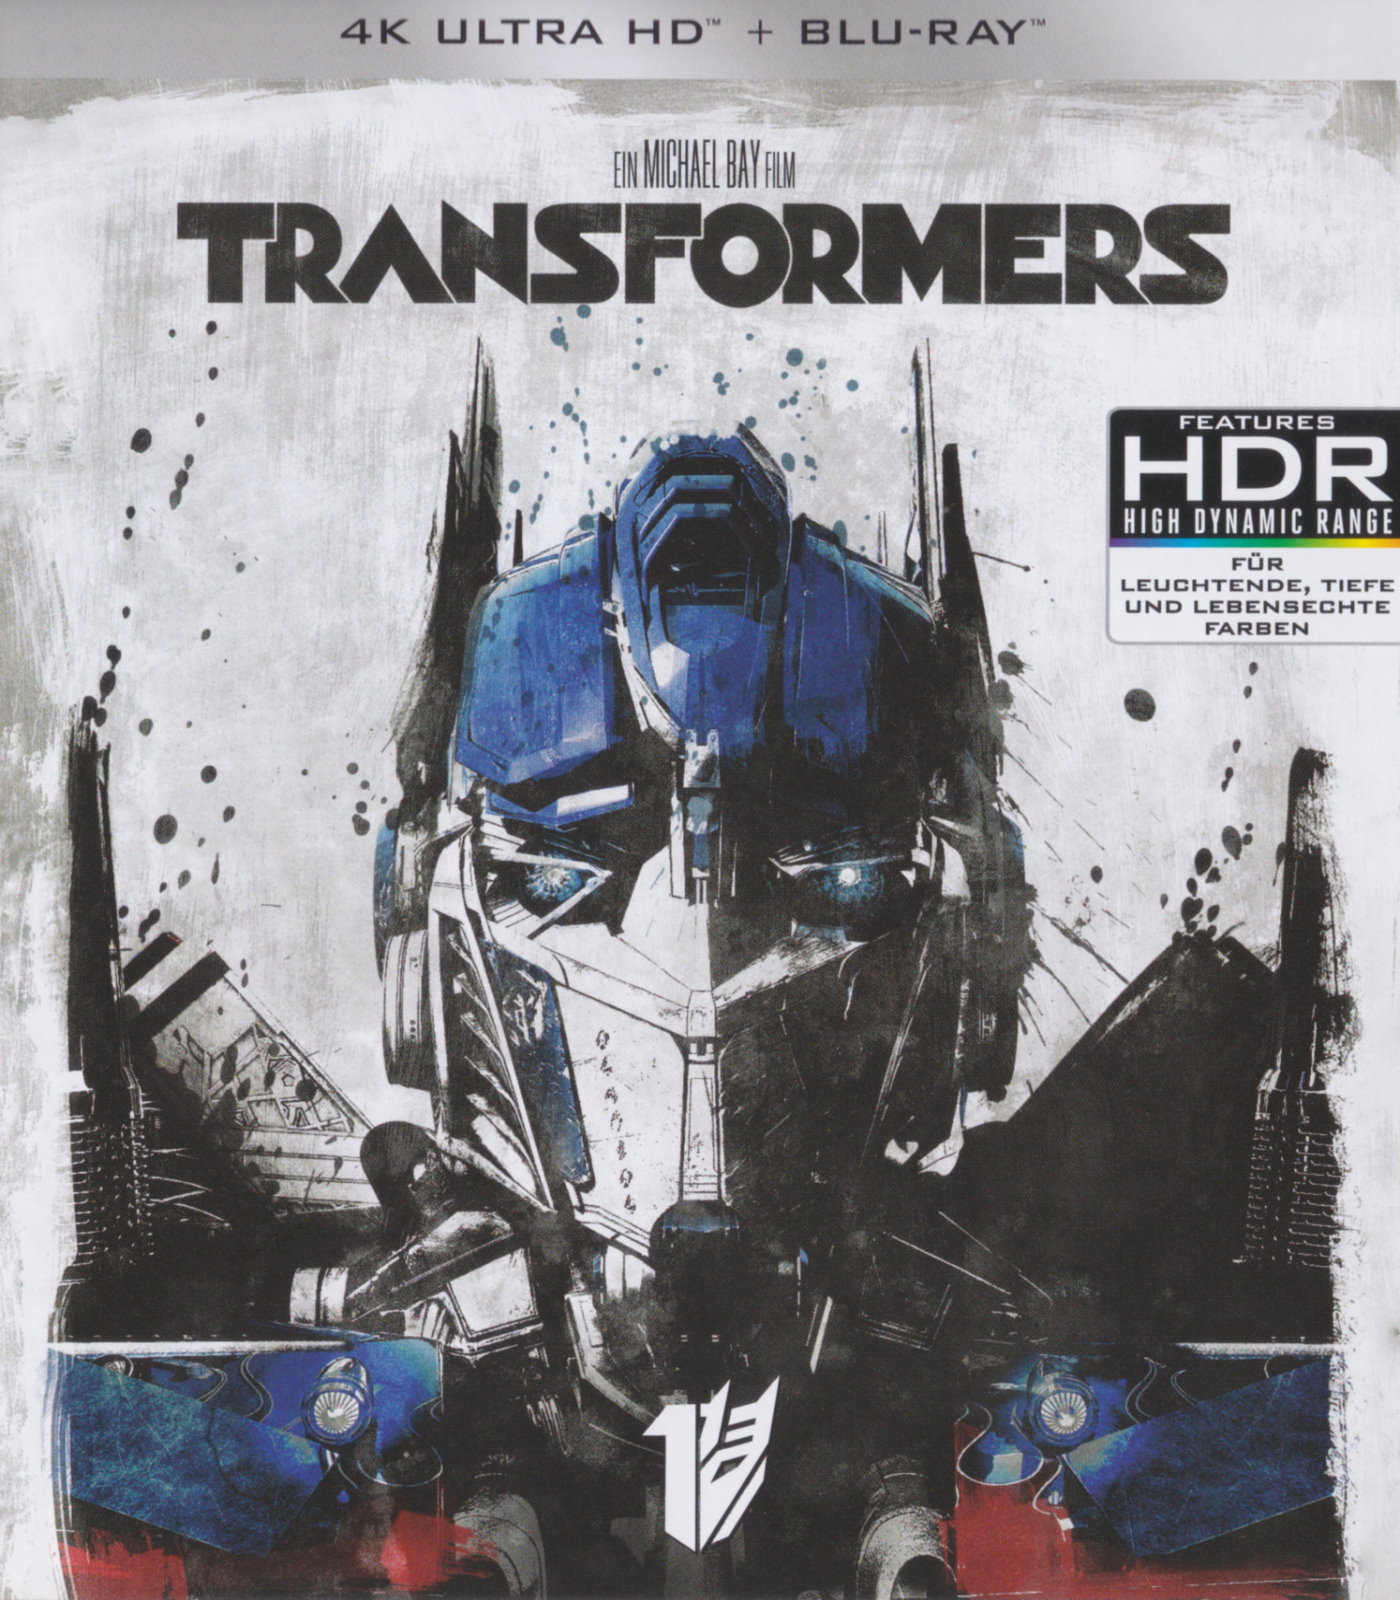 Cover - Transformers.jpg